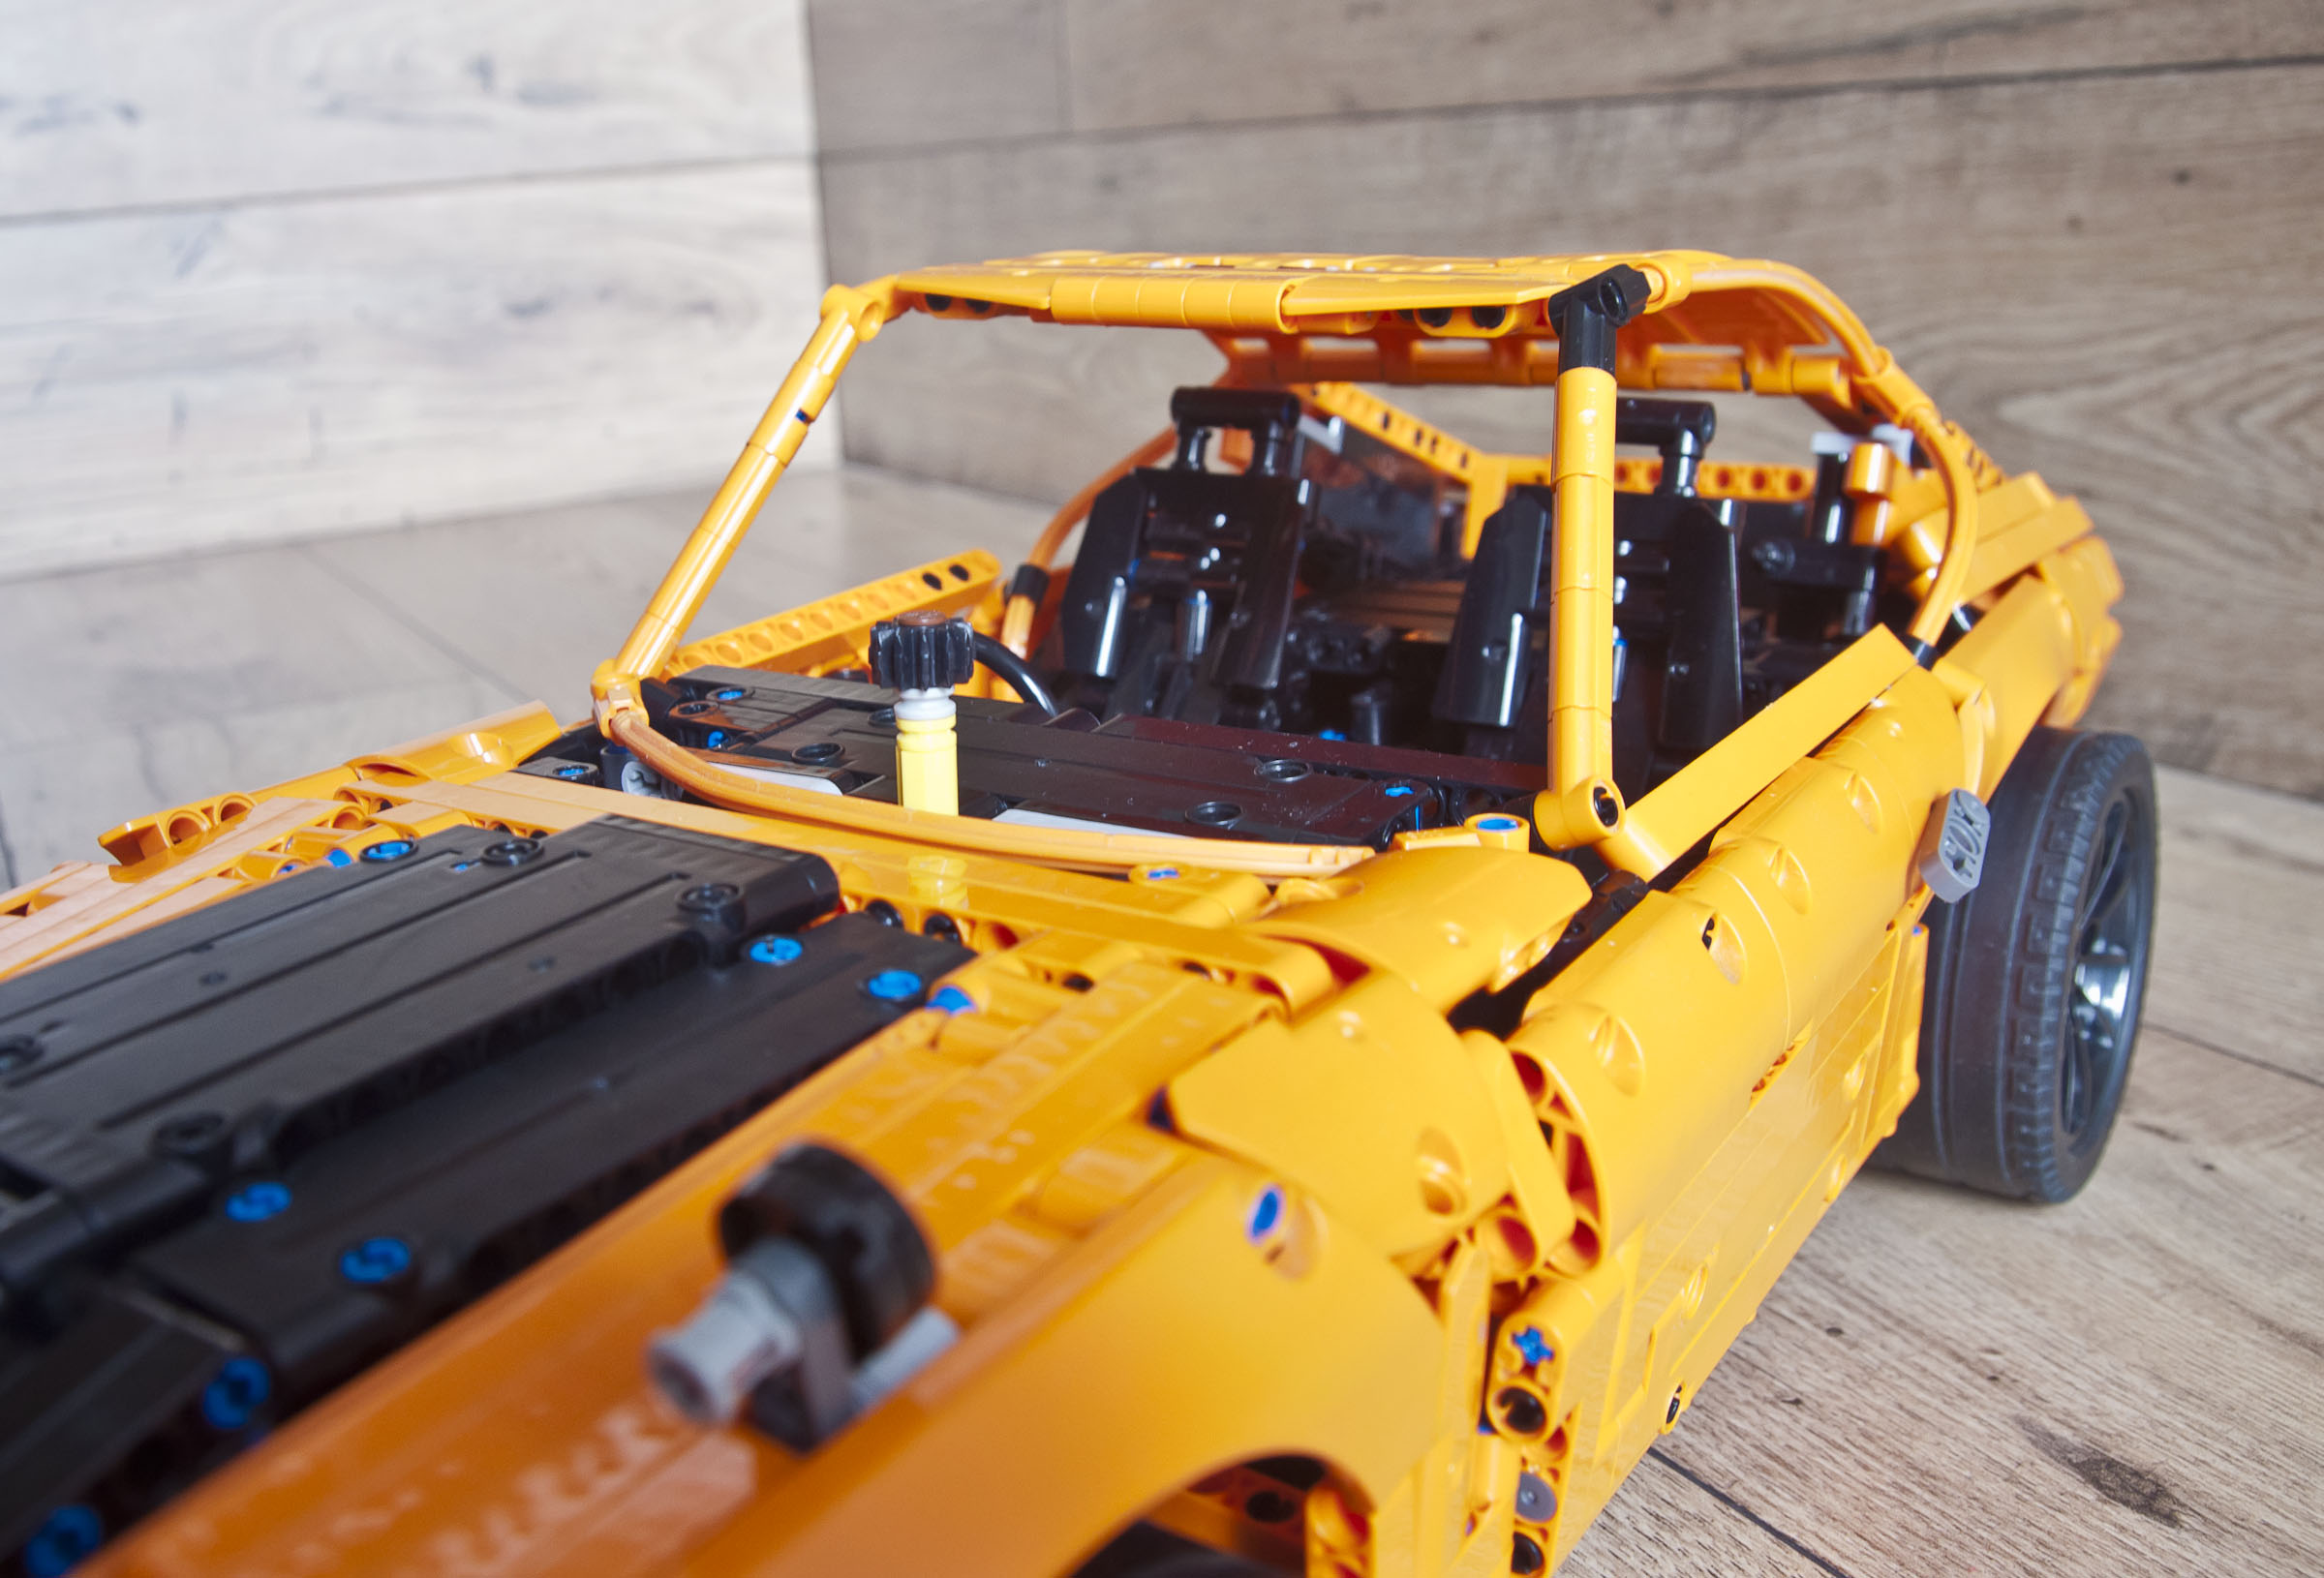 Datsun 240Z Lego